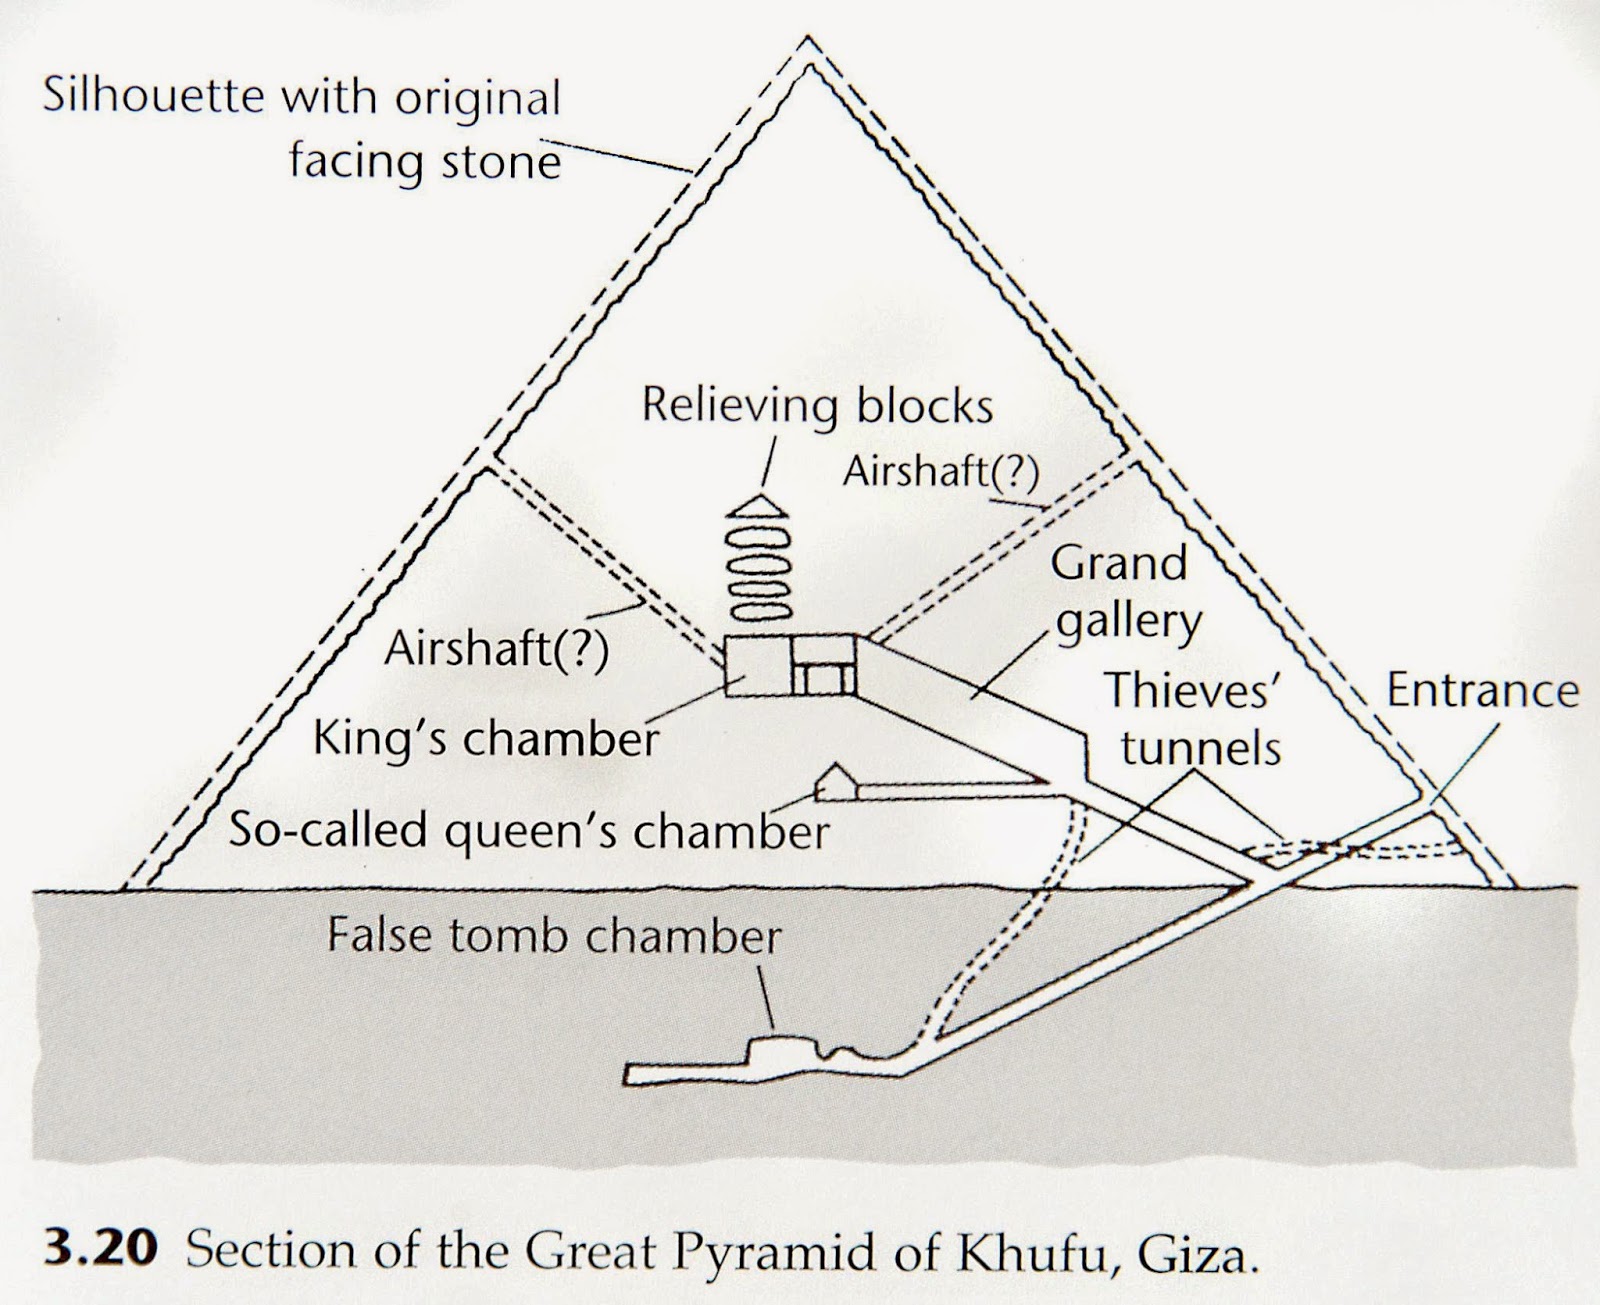 Khufu's Great Pyramid